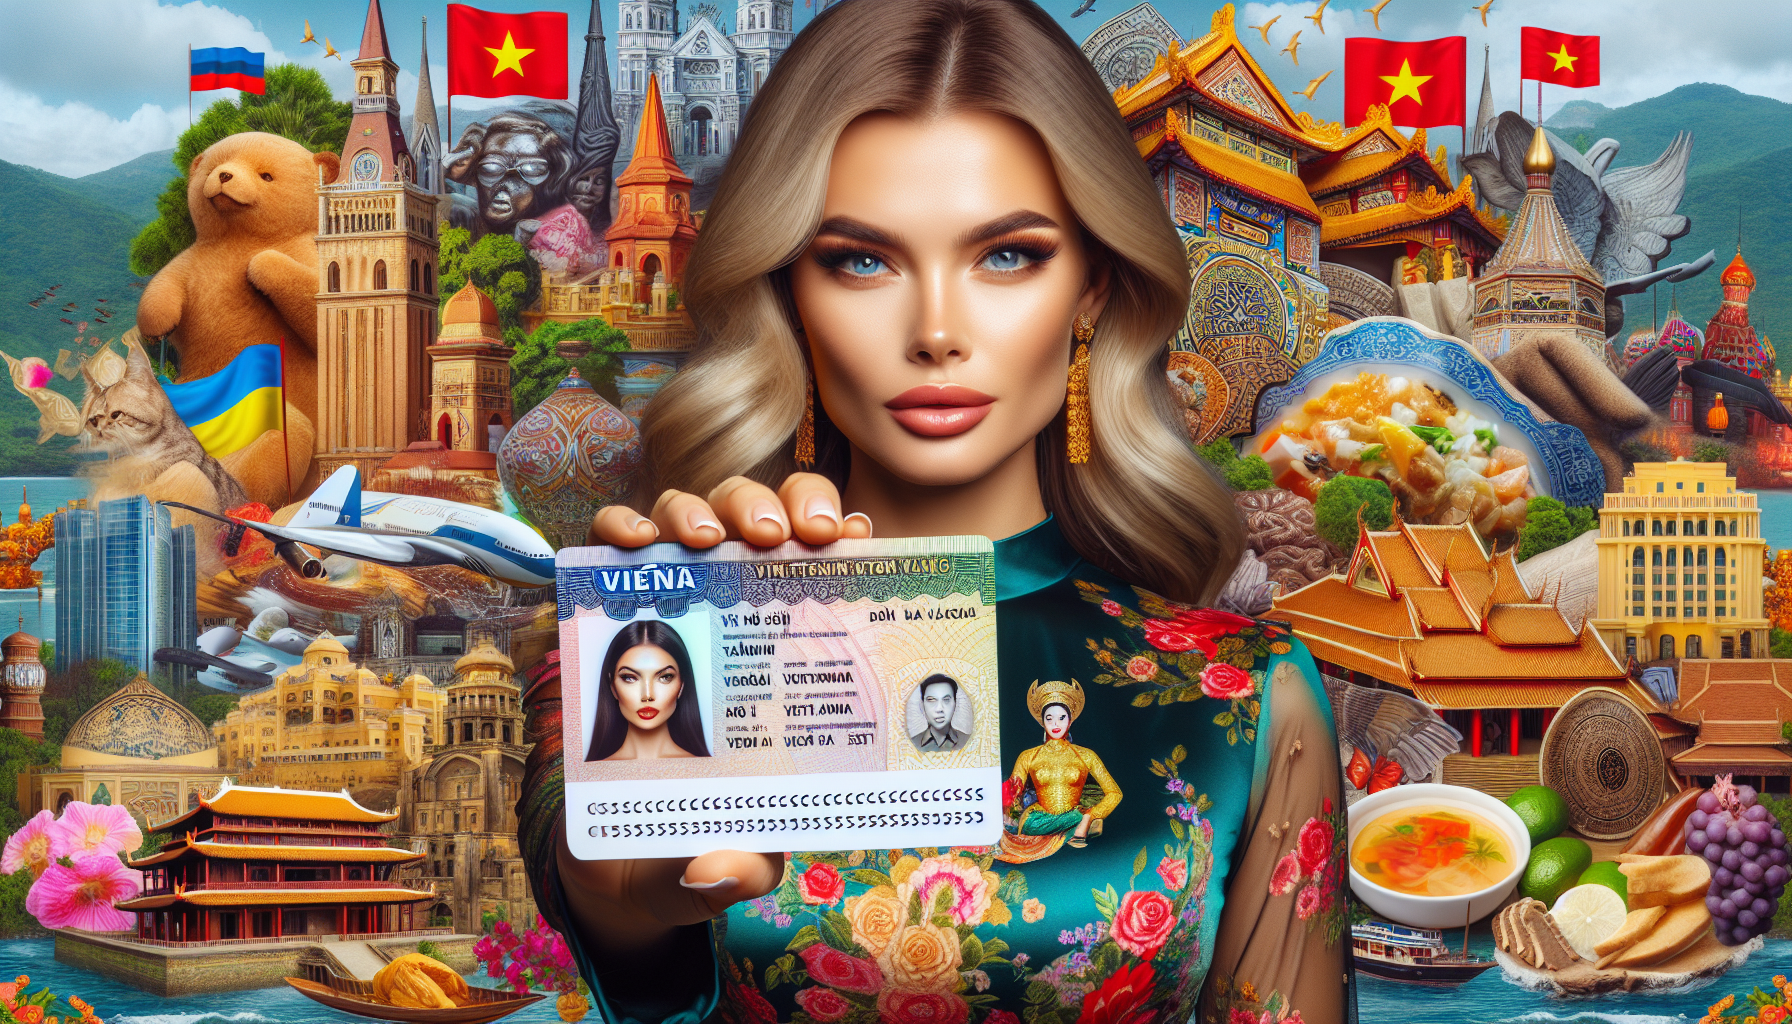 Do Ukrainian Citizens Require Vietnamese Sponsorship for Business Visas? How to Apply?